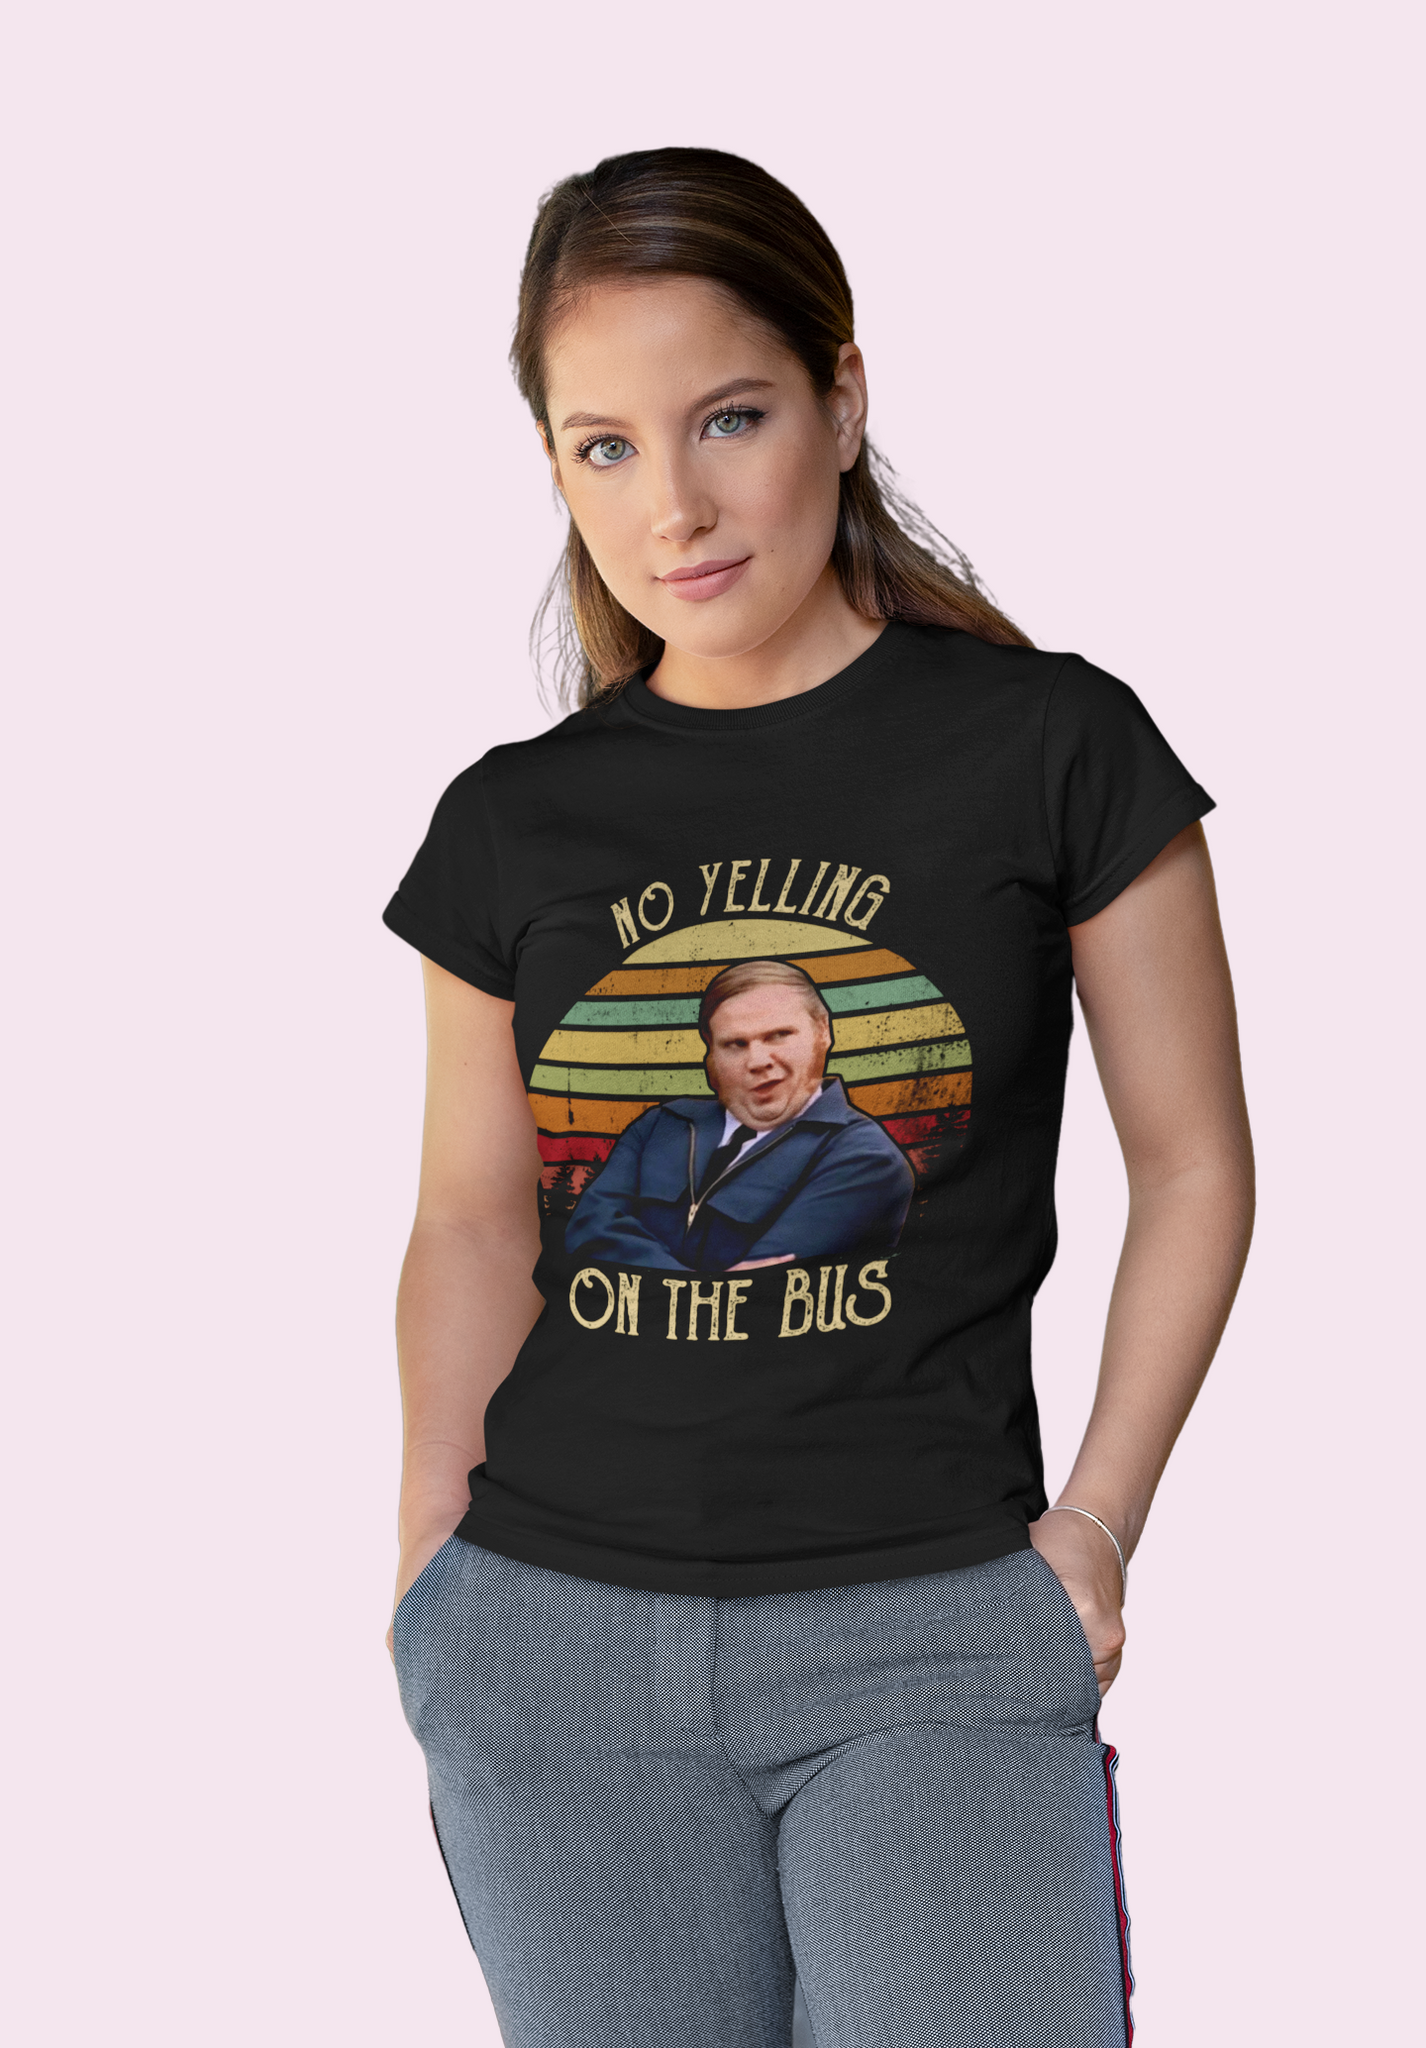 Billy Madison Vintage T Shirt, No Yelling On The Bus Tshirt, Bus Driver T Shirt